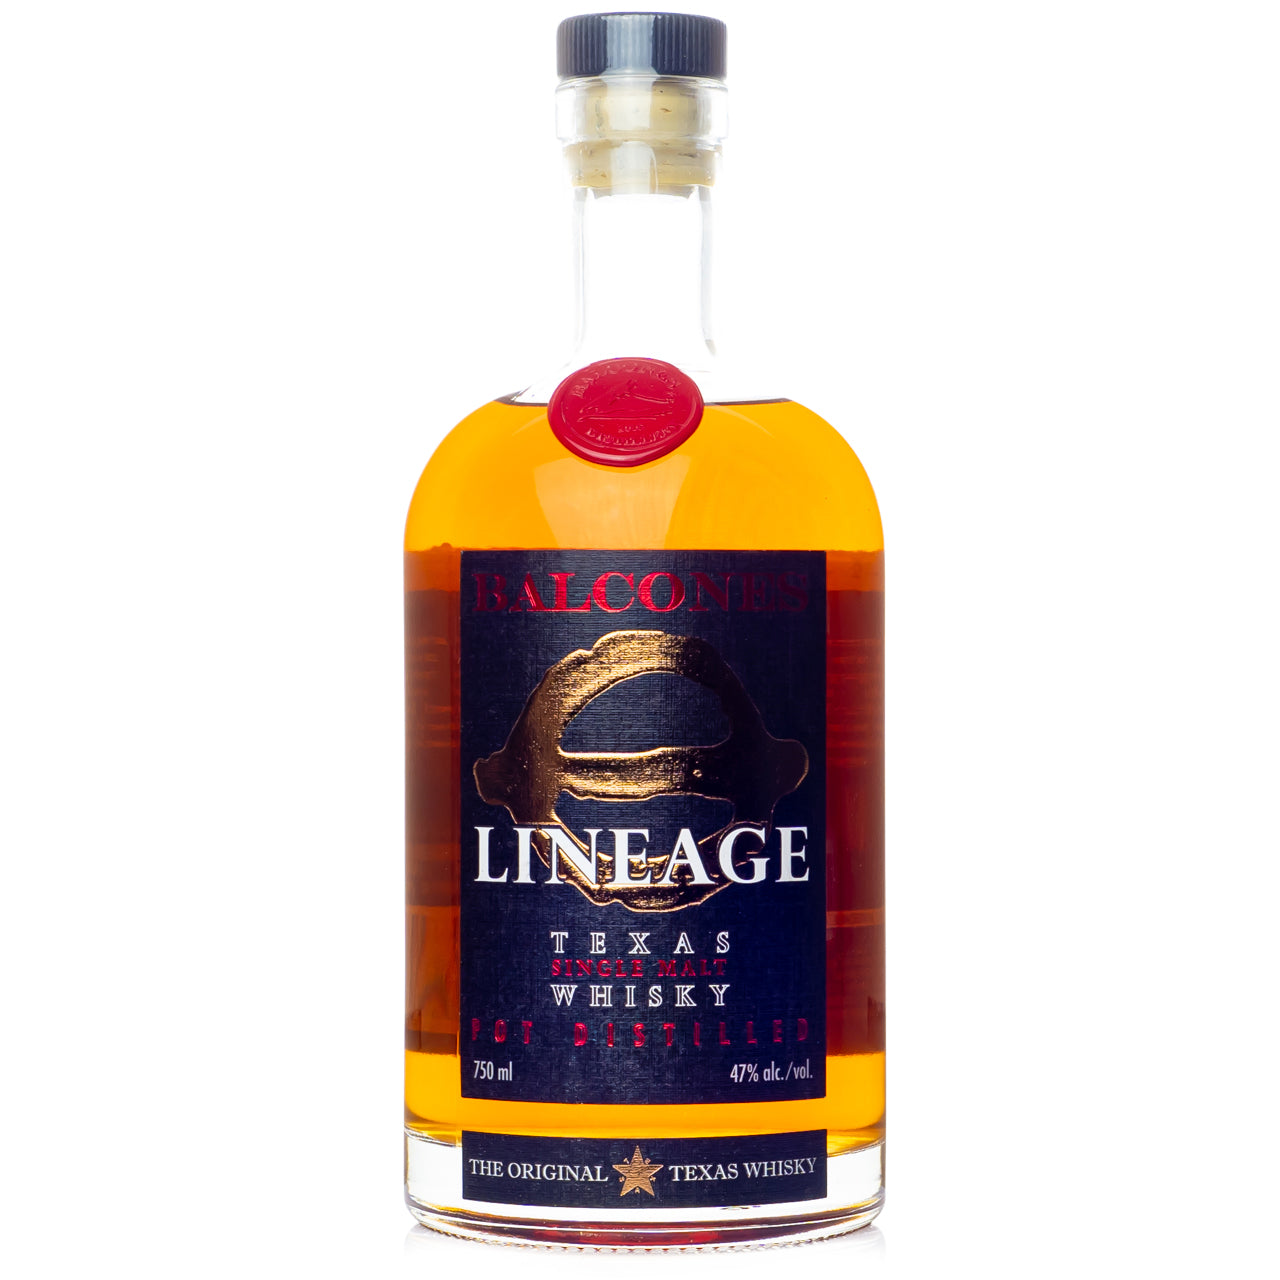 Balcones Lineage Single Malt Whisky